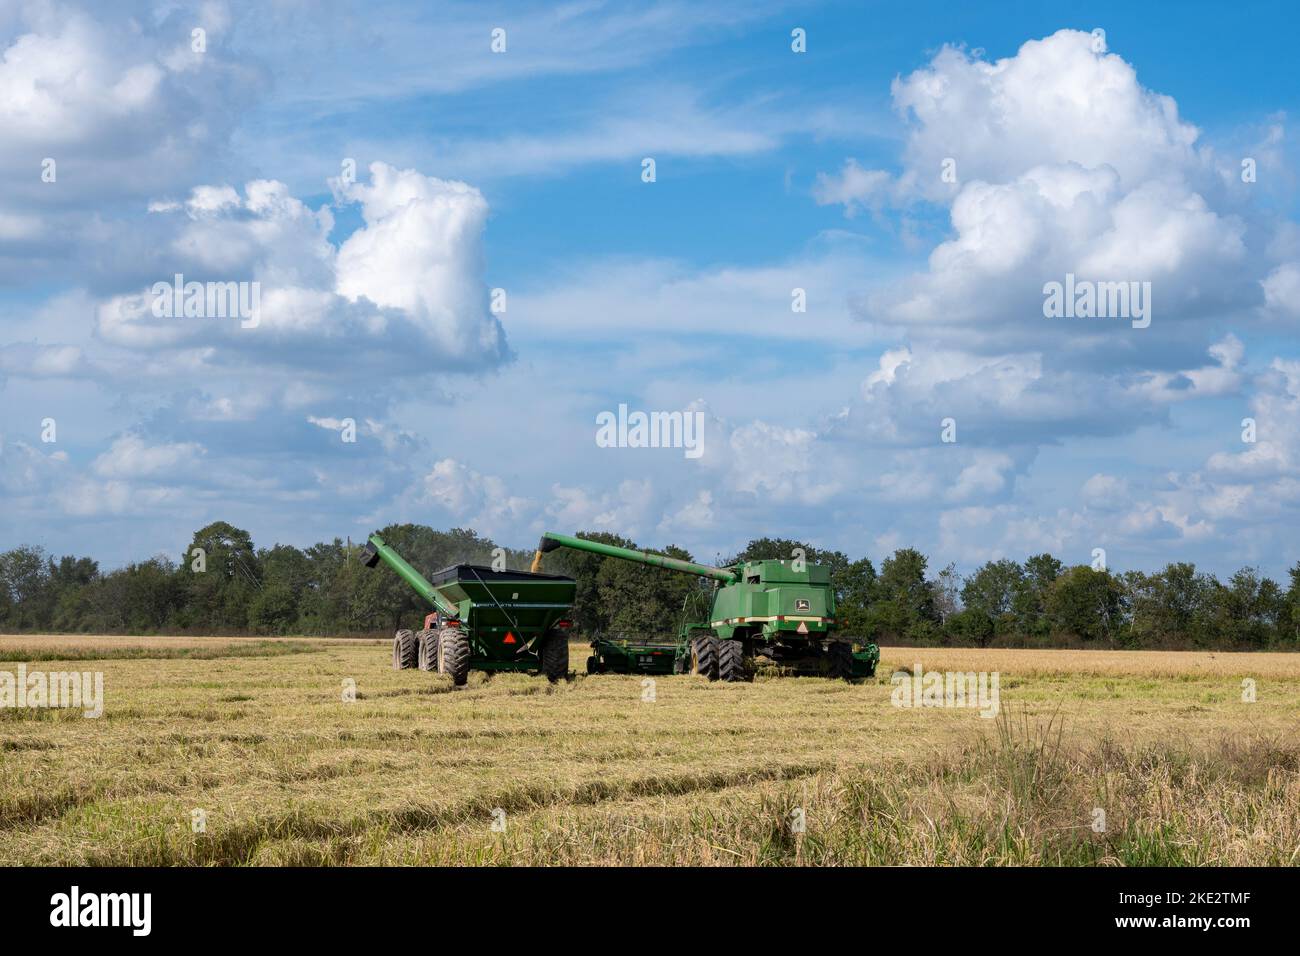 A farmer operating a John Deere combine harvesting rice in a rice field. Katy, Texas, USA. Stock Photo